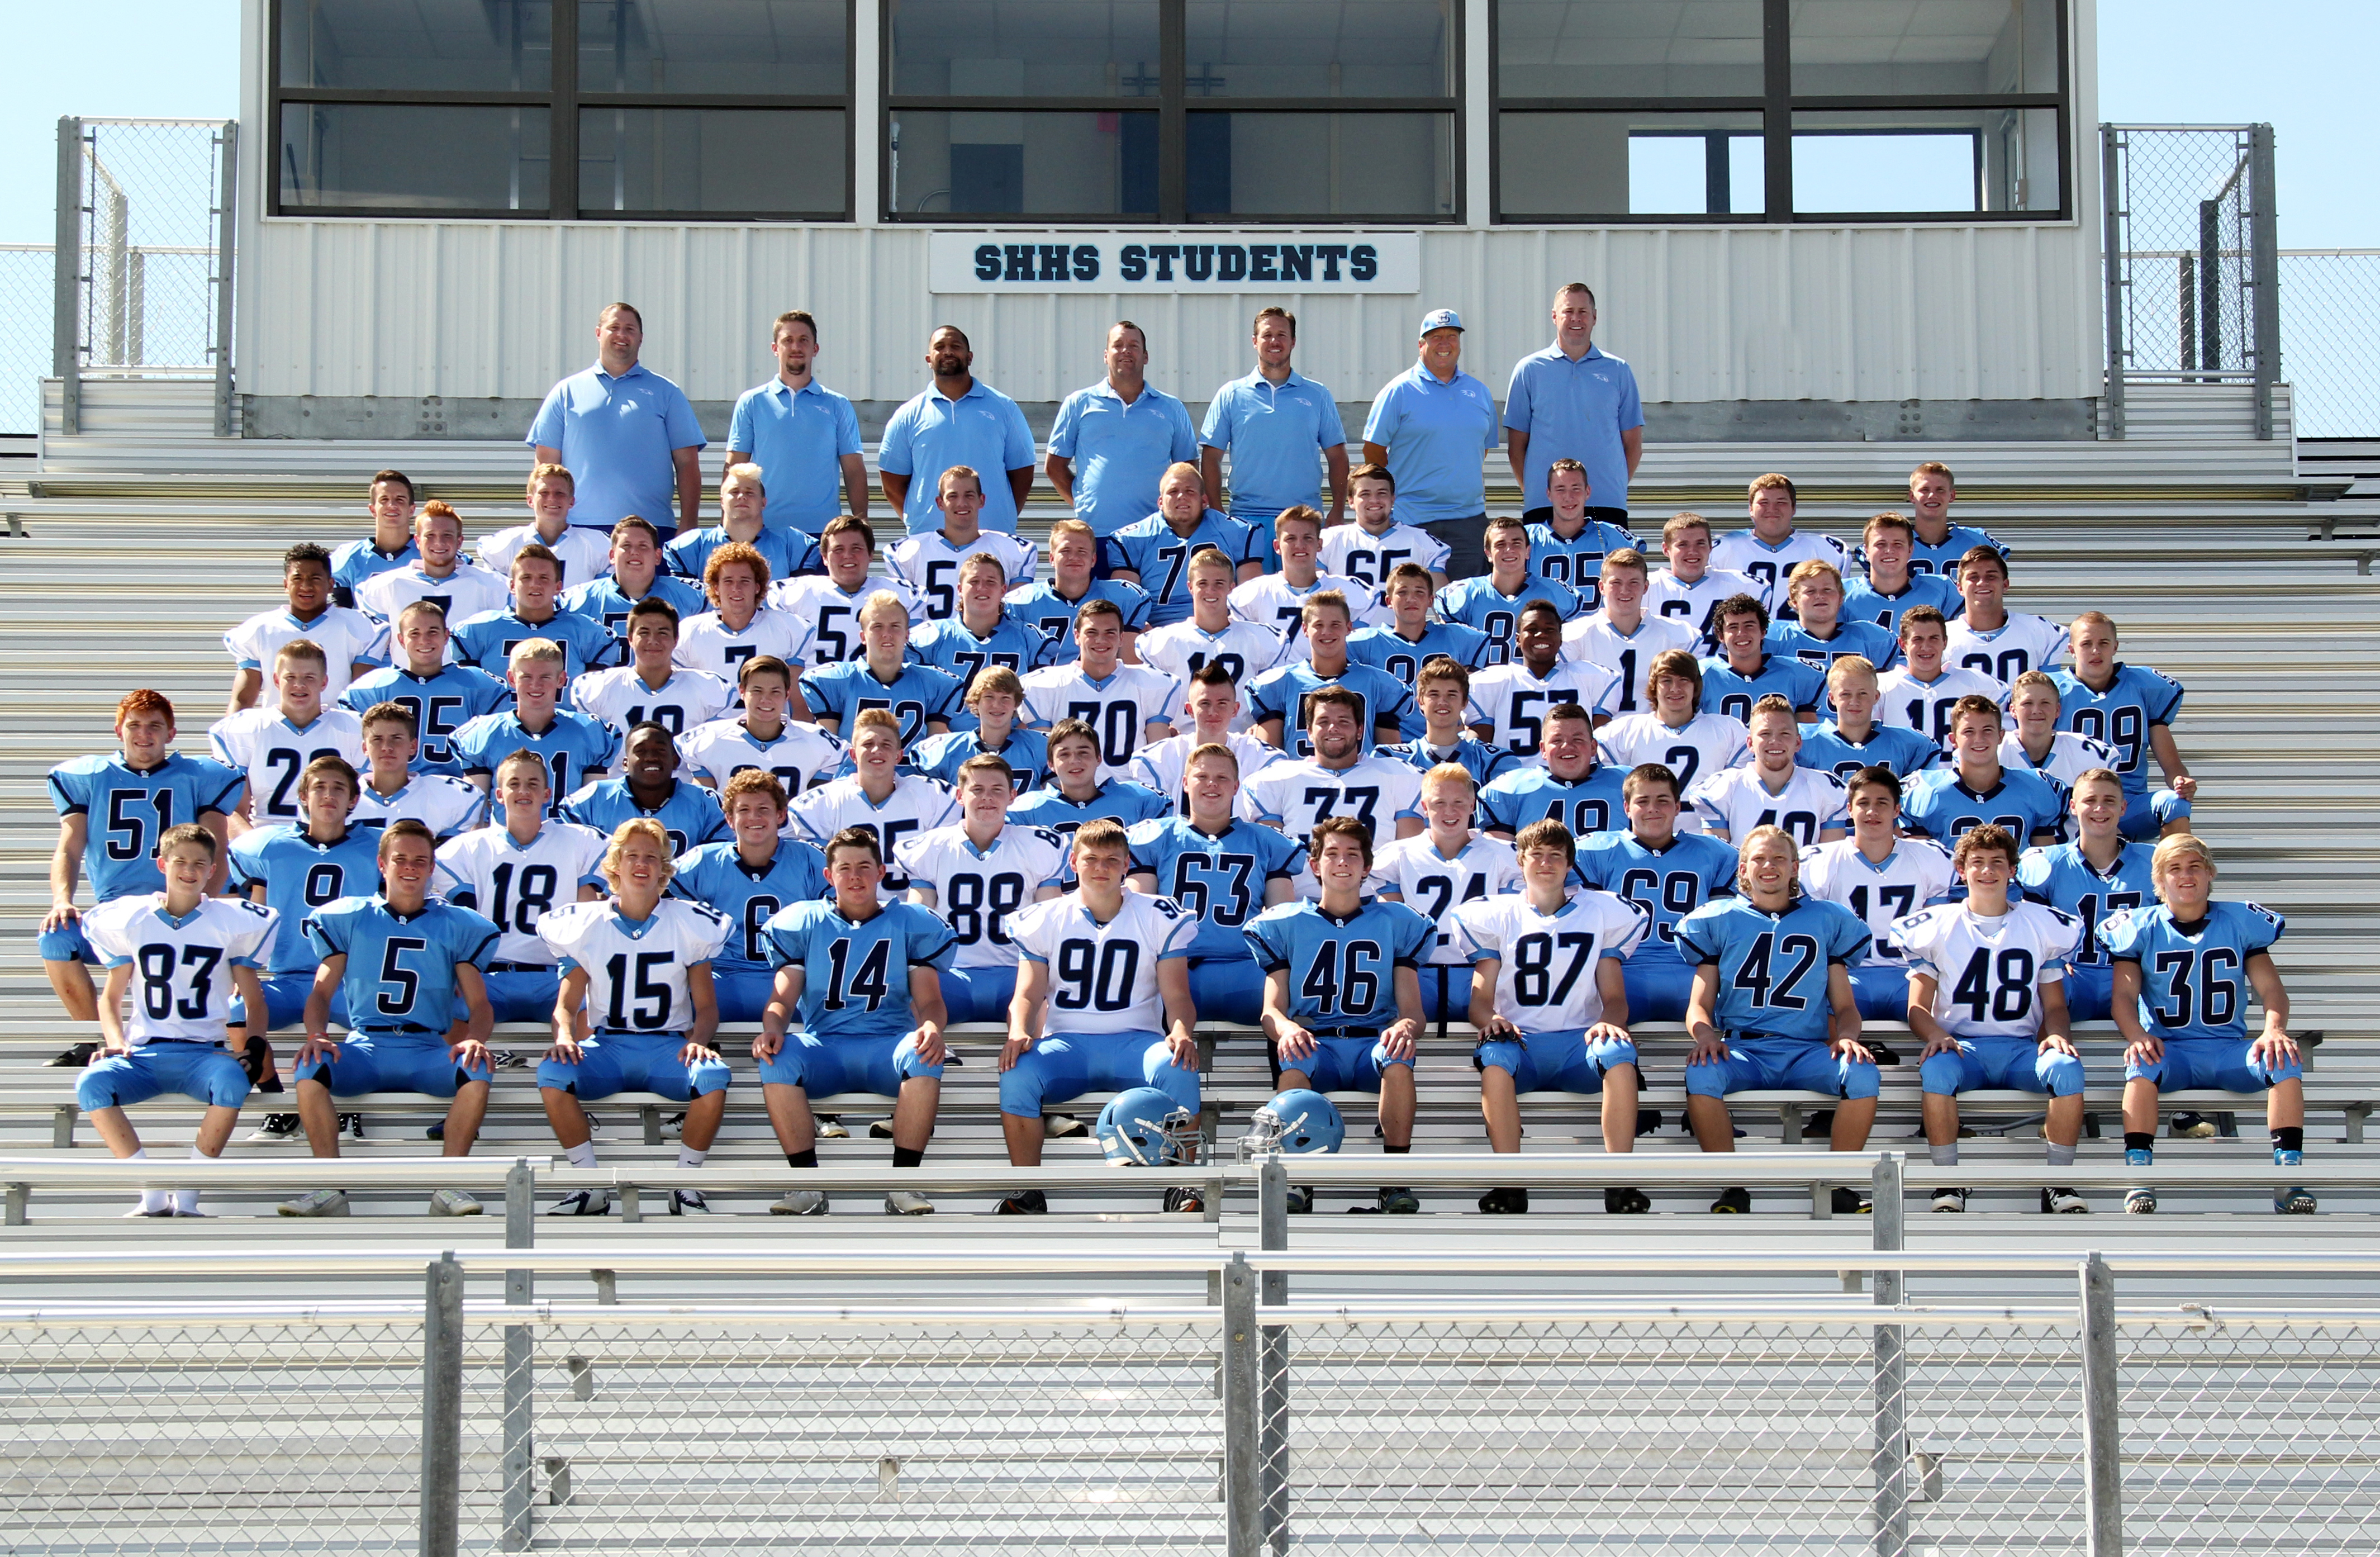 2014 Football Team Salem Hills High School